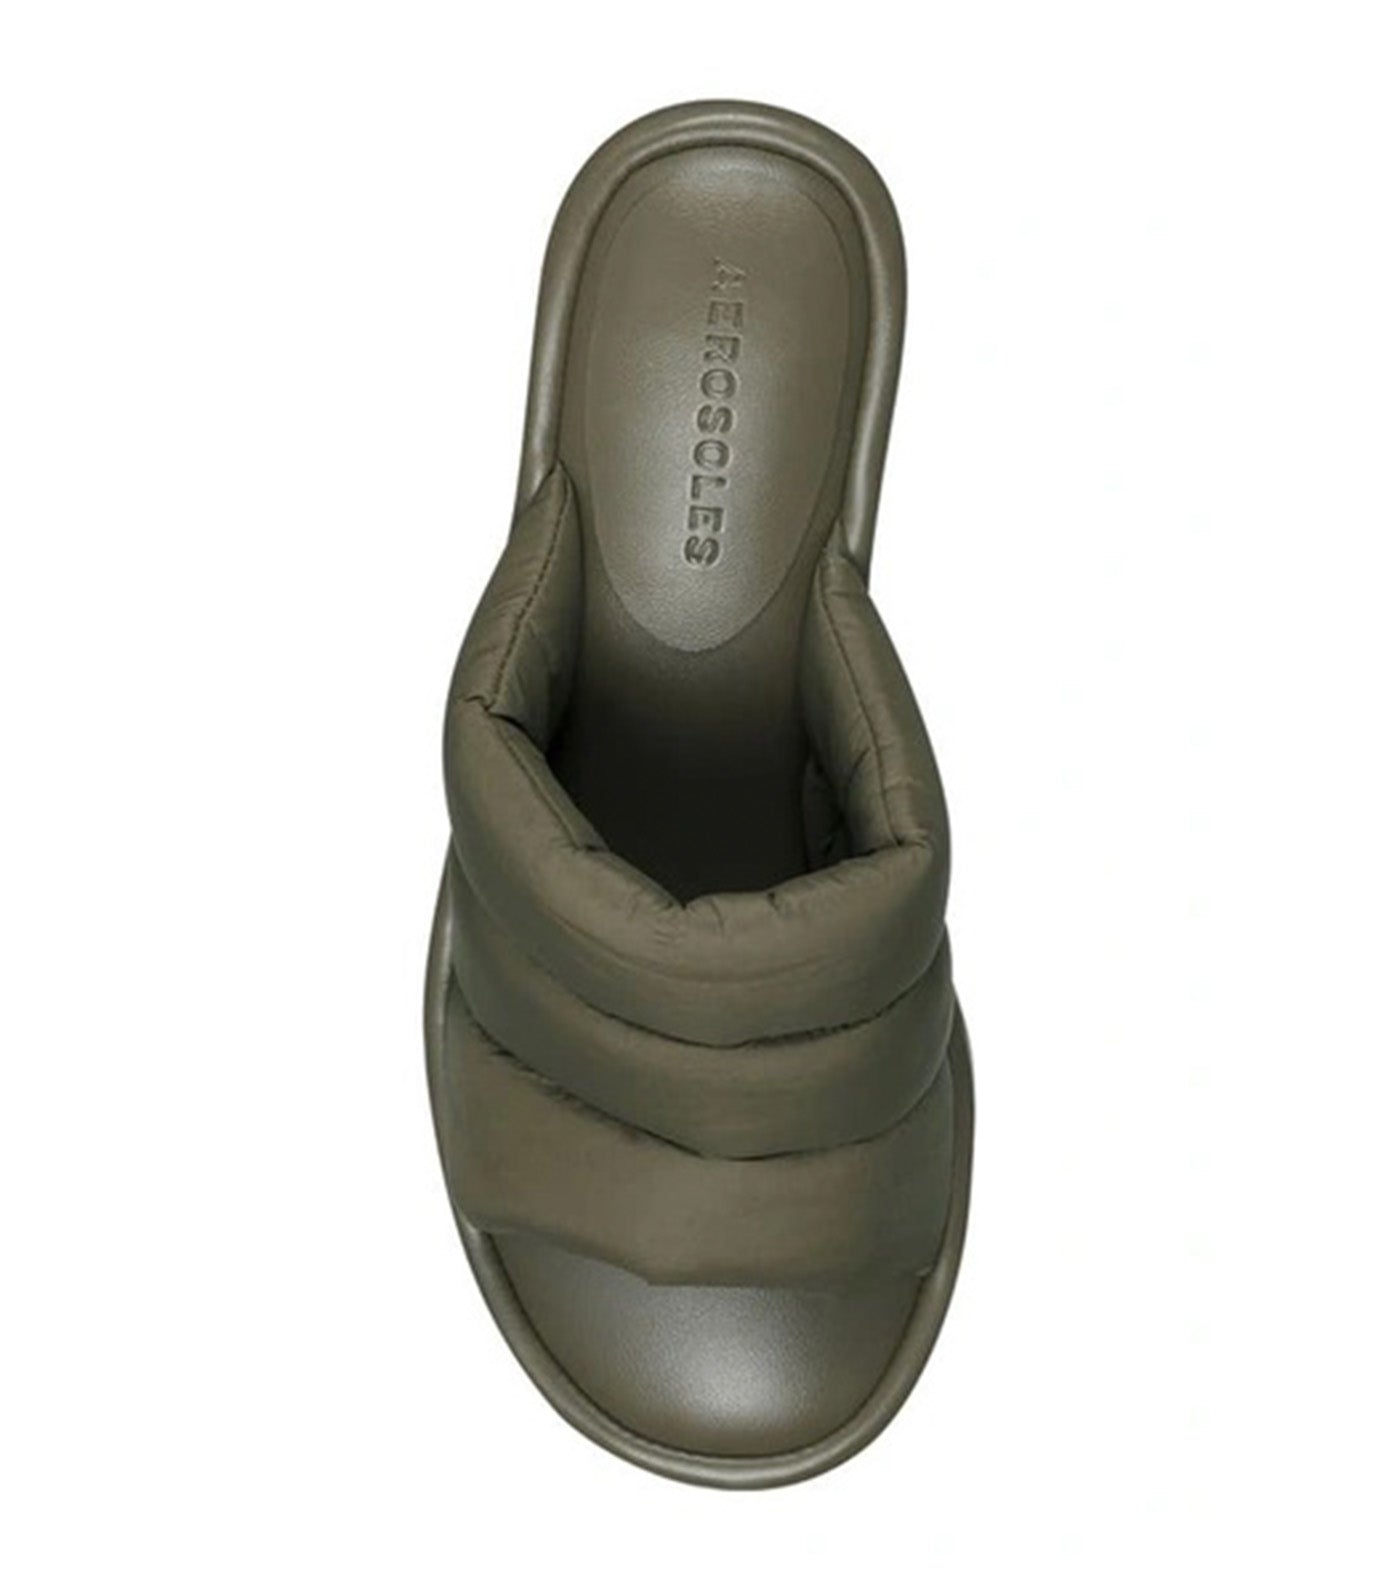 Puffer Heel Sandals Army Green